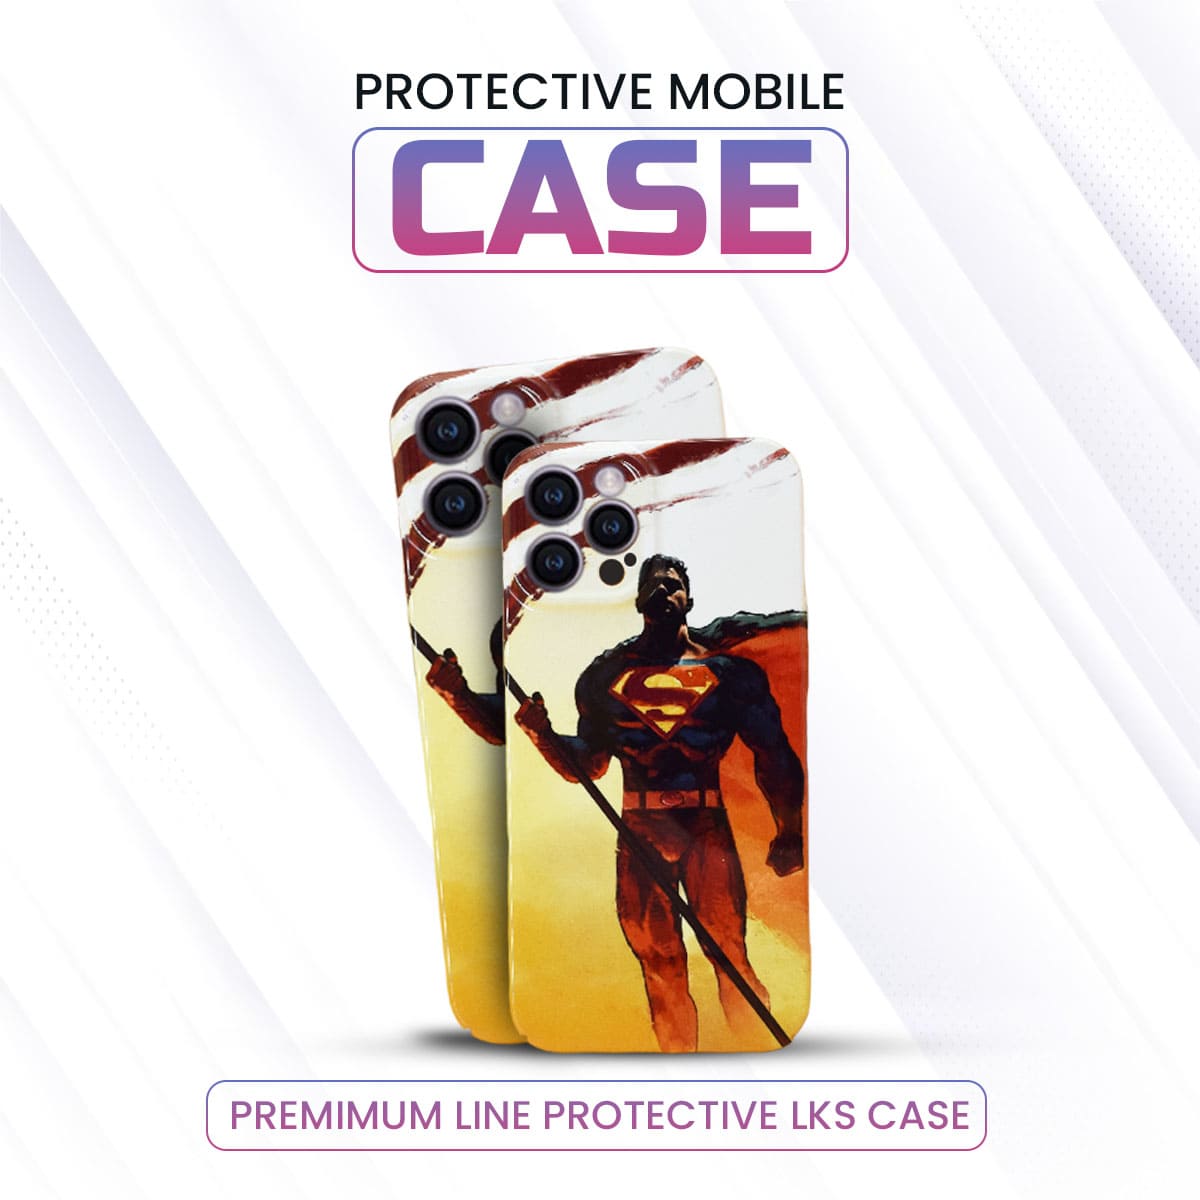 iPhone Superman Printed Case